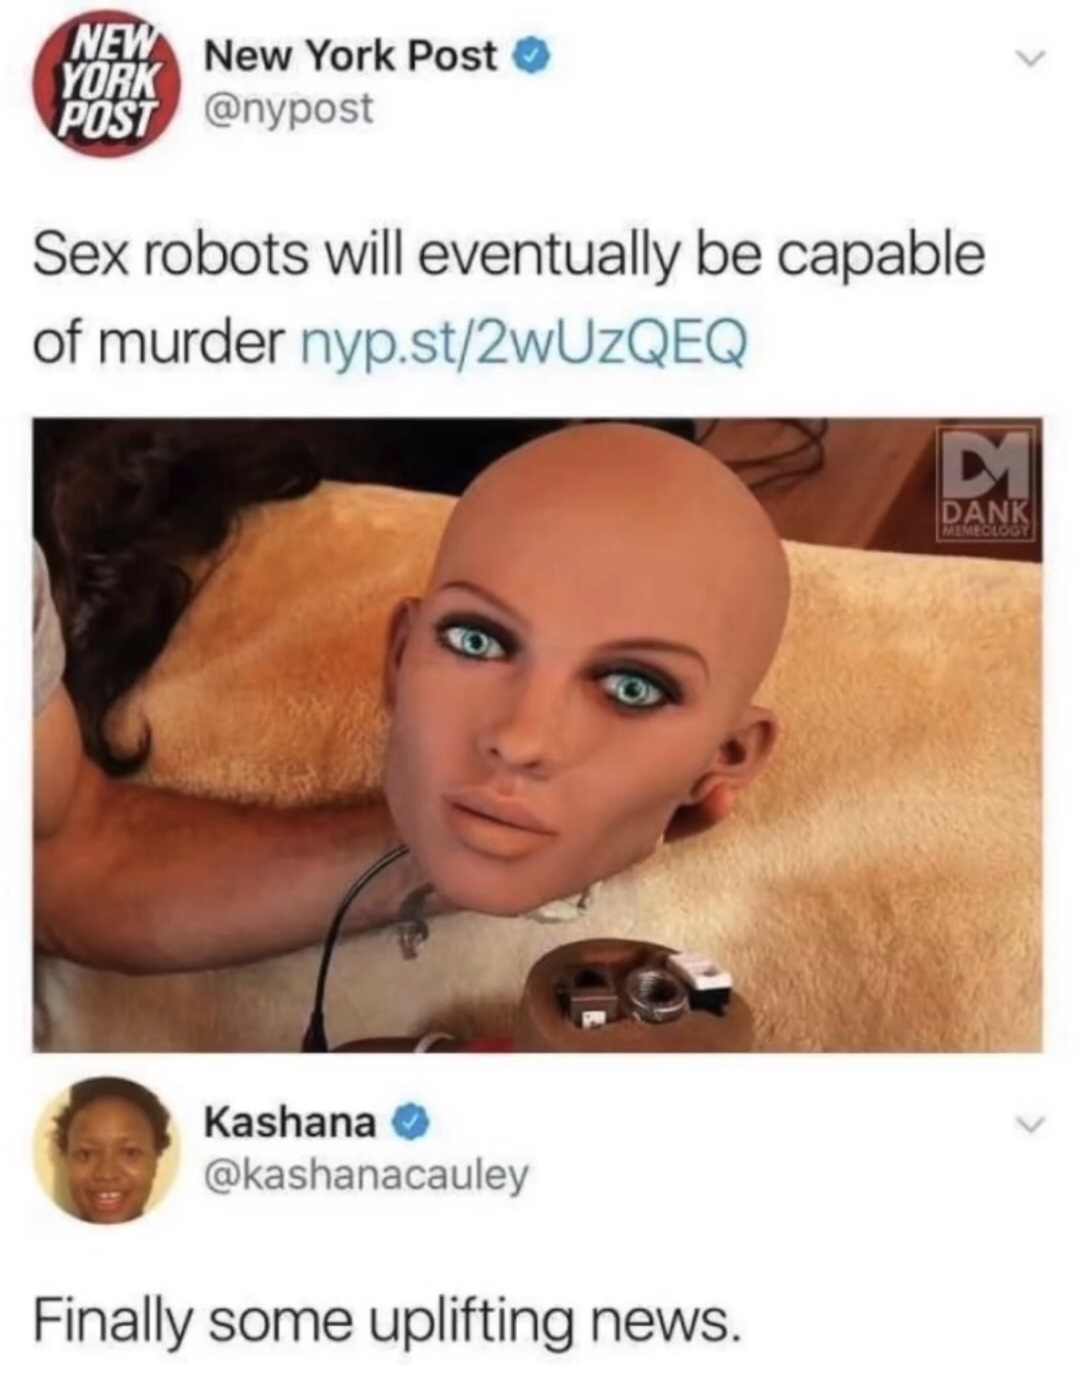 new york post - New York New York Post Sex robots will eventually be capable of murder nyp.st2wUZQEQ Dank Meme Kashana Finally some uplifting news.